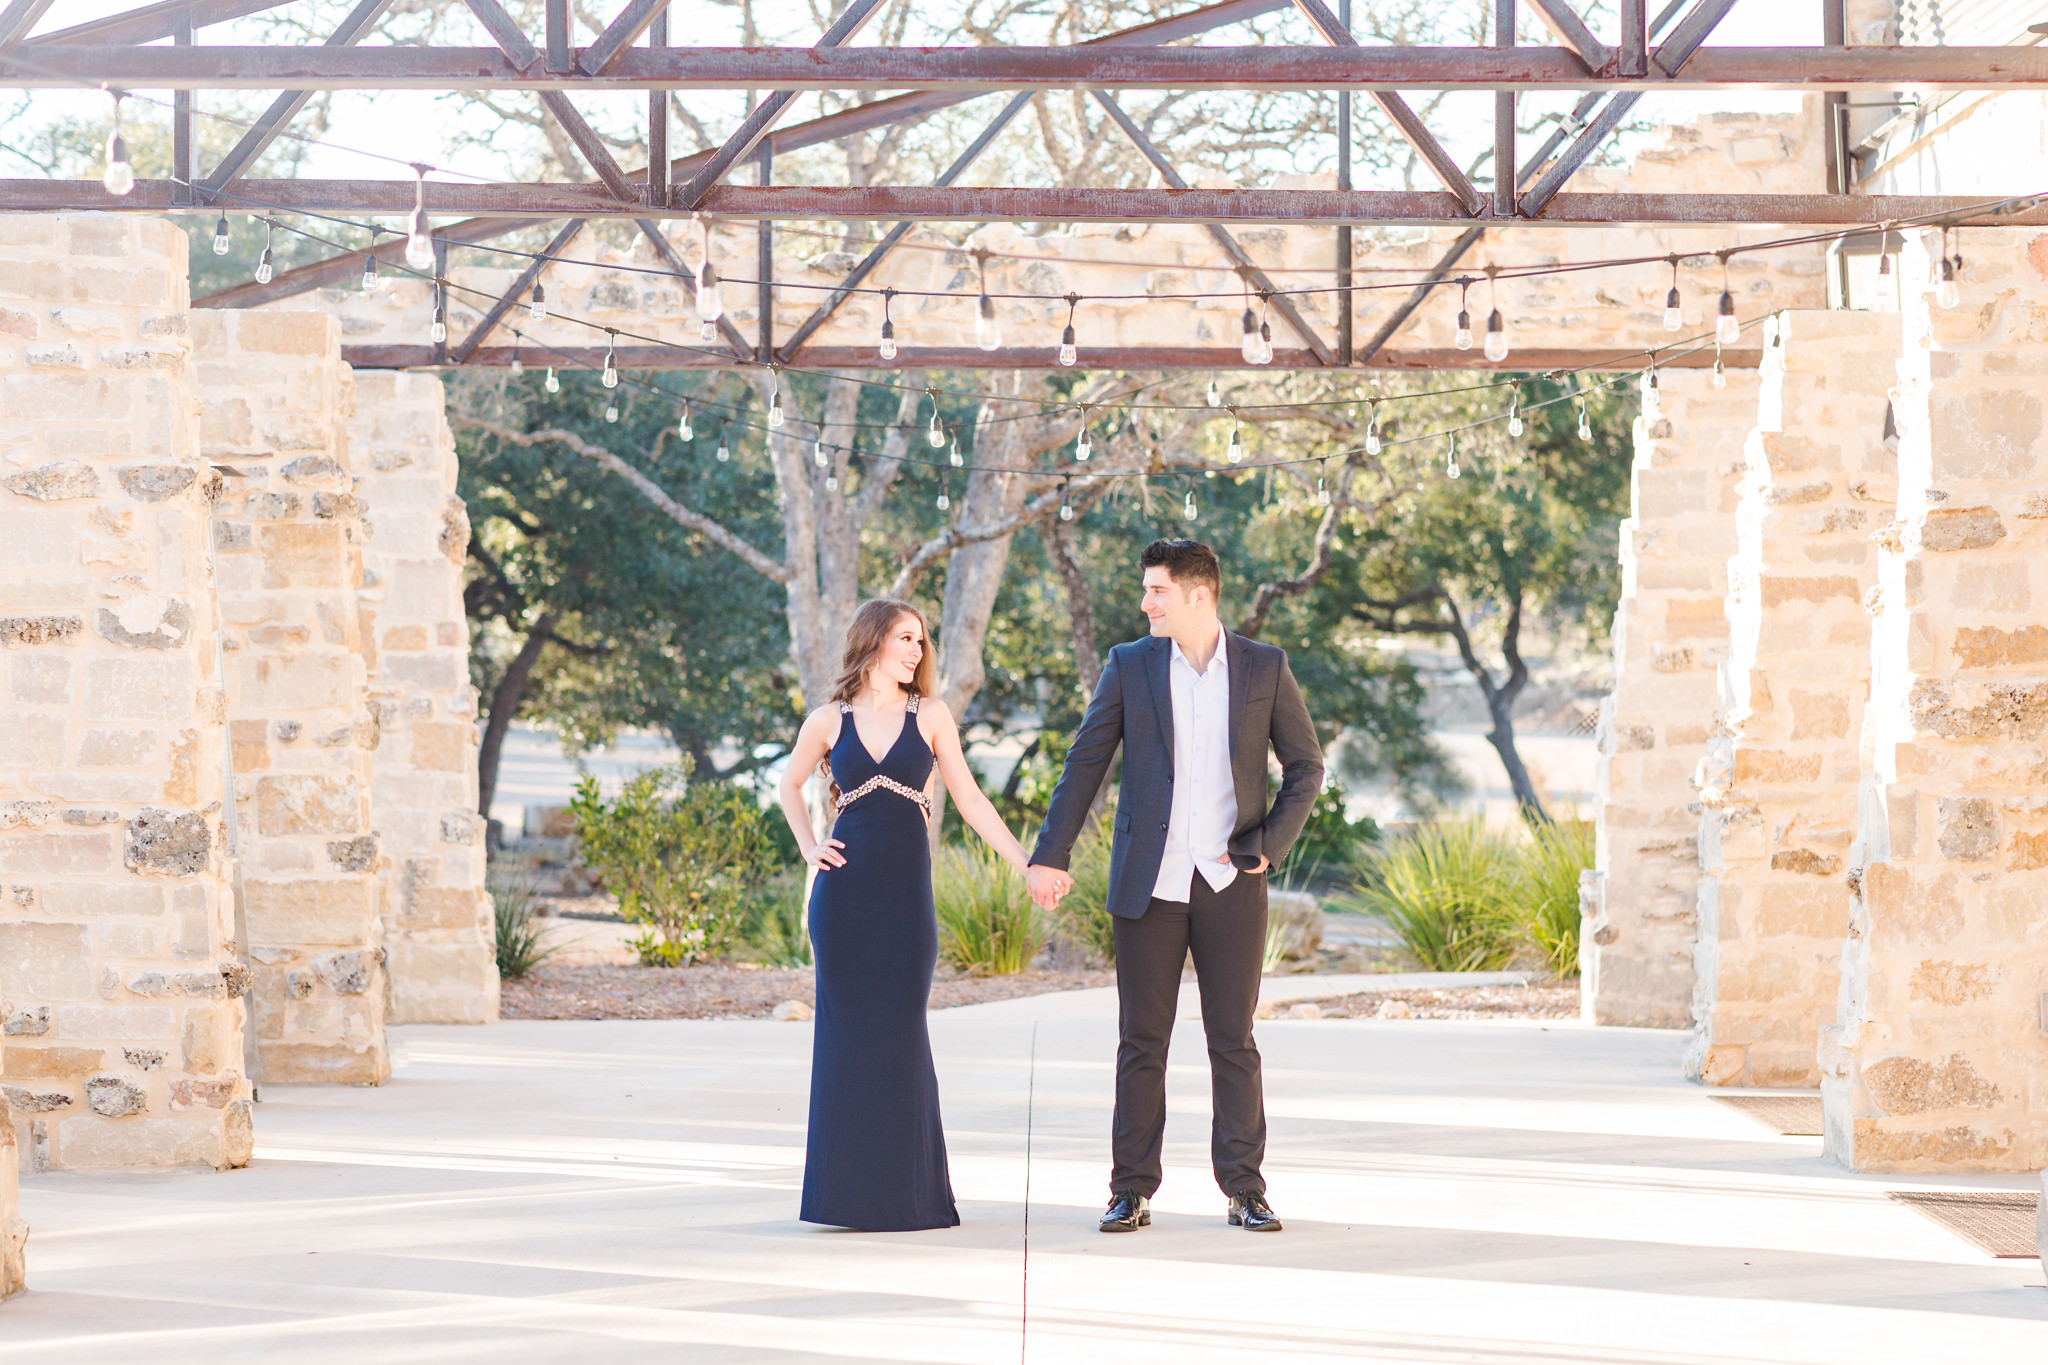 An Engagement Session at Park 31 in Spring Branch, TX by Dawn Elizabeth Studios, San Antonio Wedding Photographer